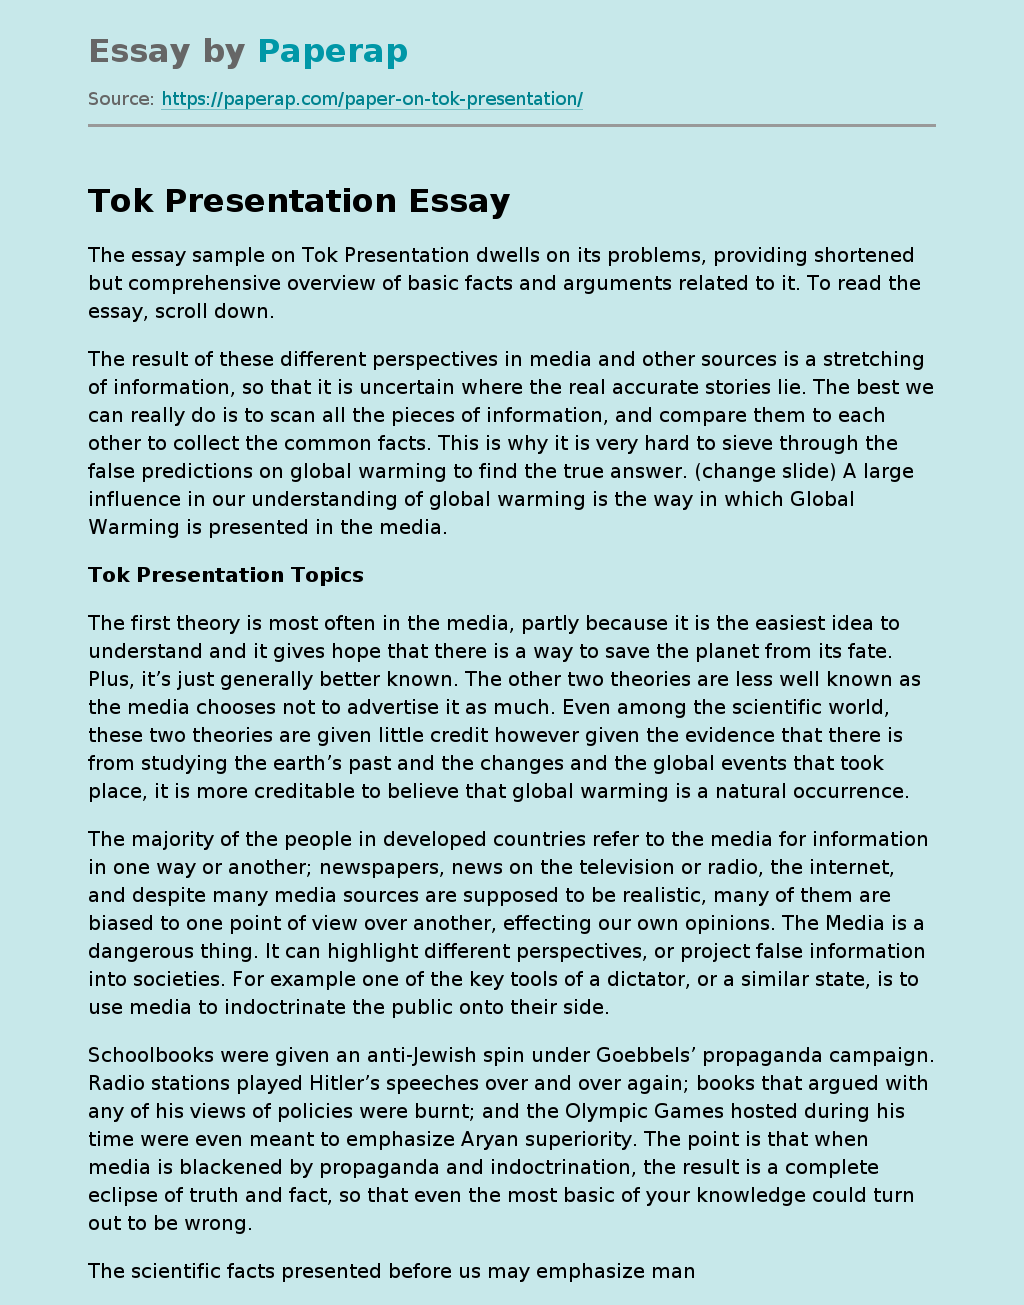 Tok Presentation Topics